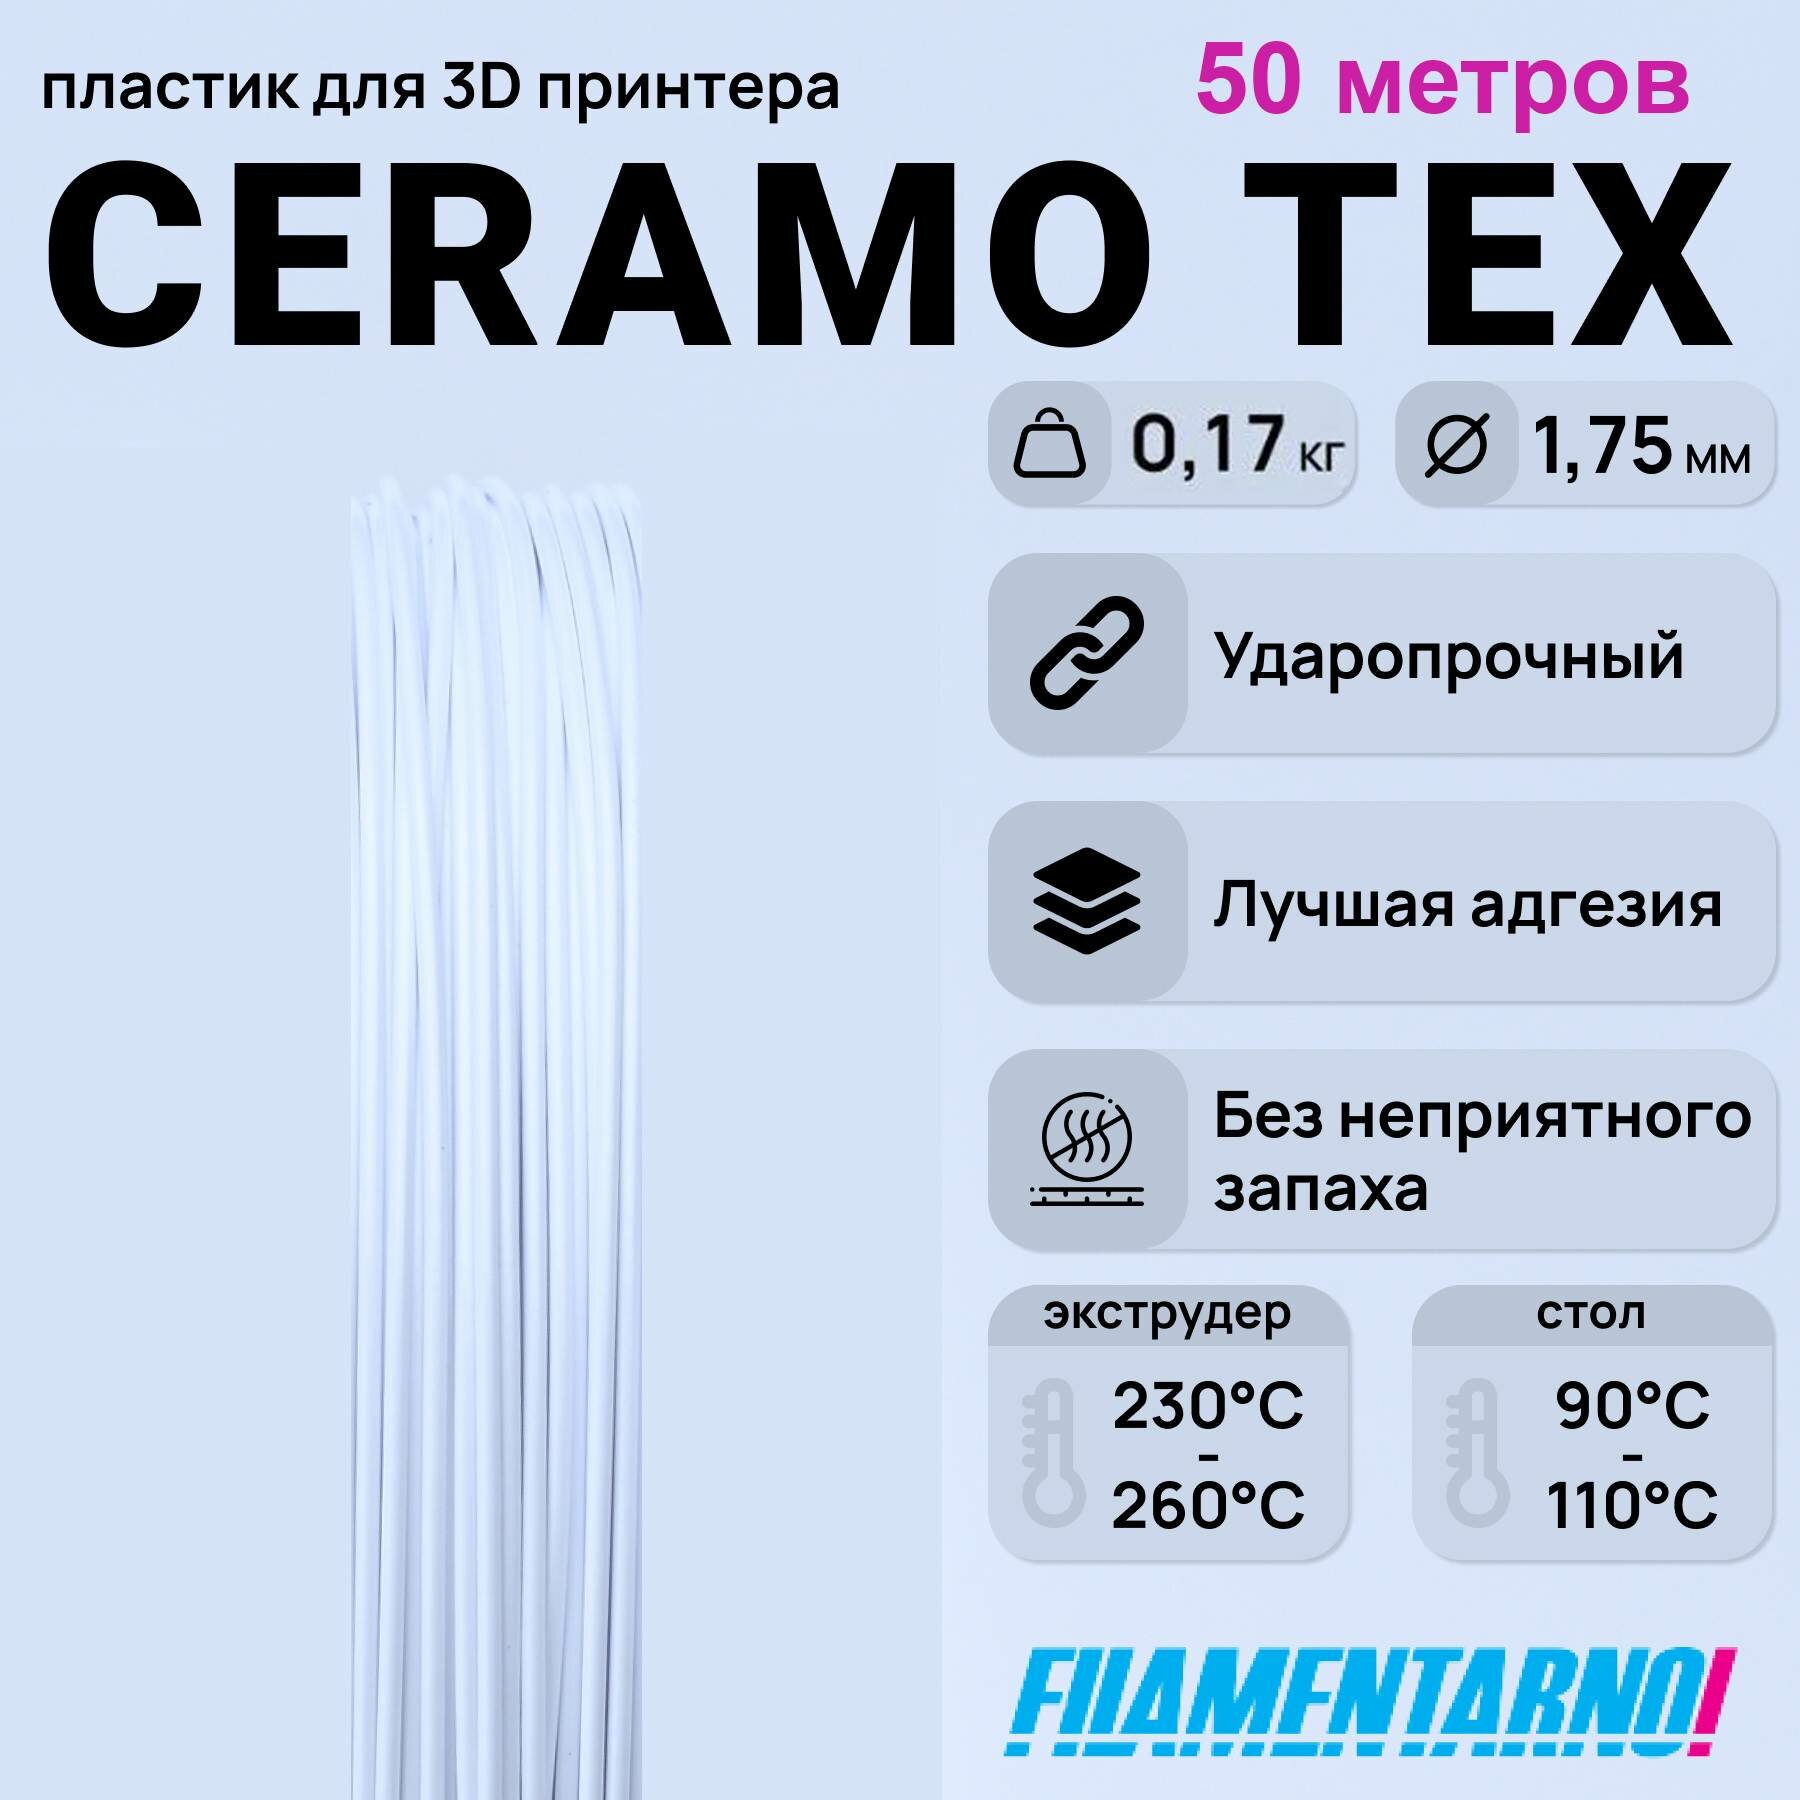 SAN Ceramo-Tex белый моток 50 м, 1,75 мм, пластик Filamentarno для 3D-принтера